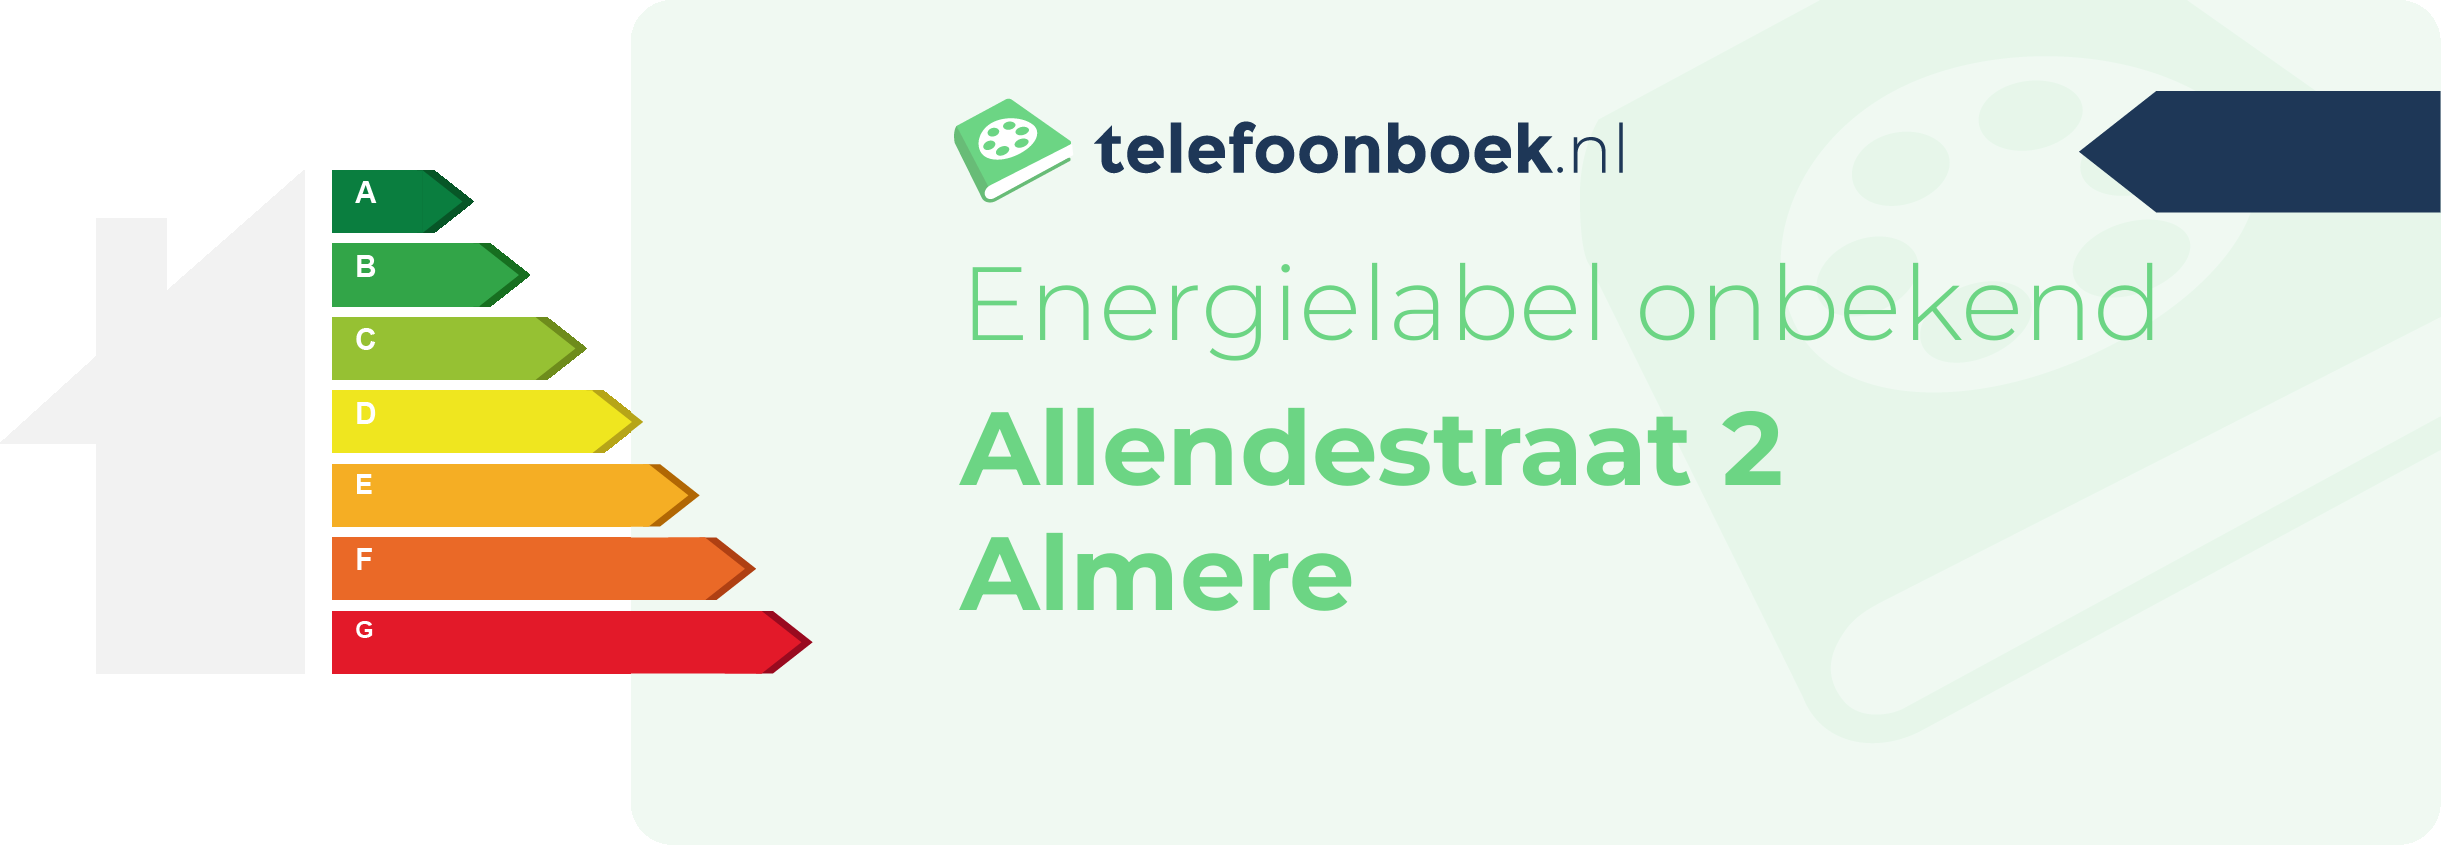 Energielabel Allendestraat 2 Almere